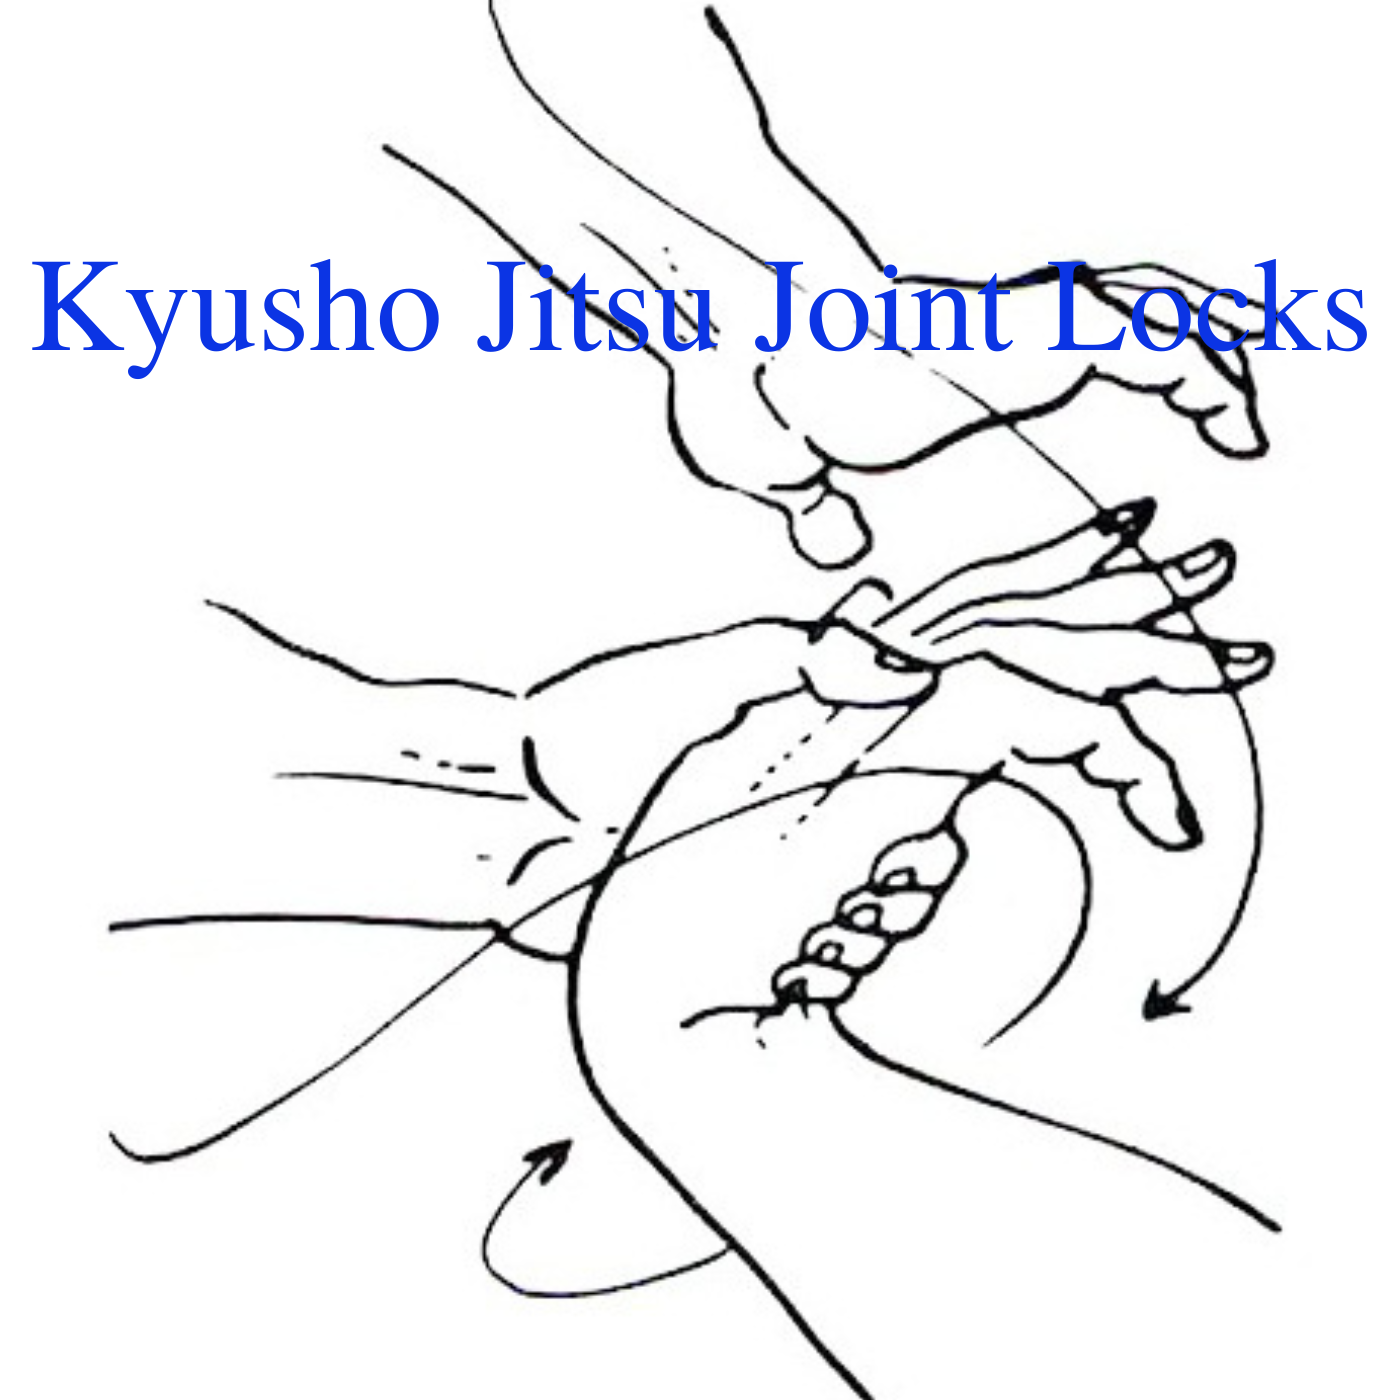 Kyusho Jitsu Joint Locks